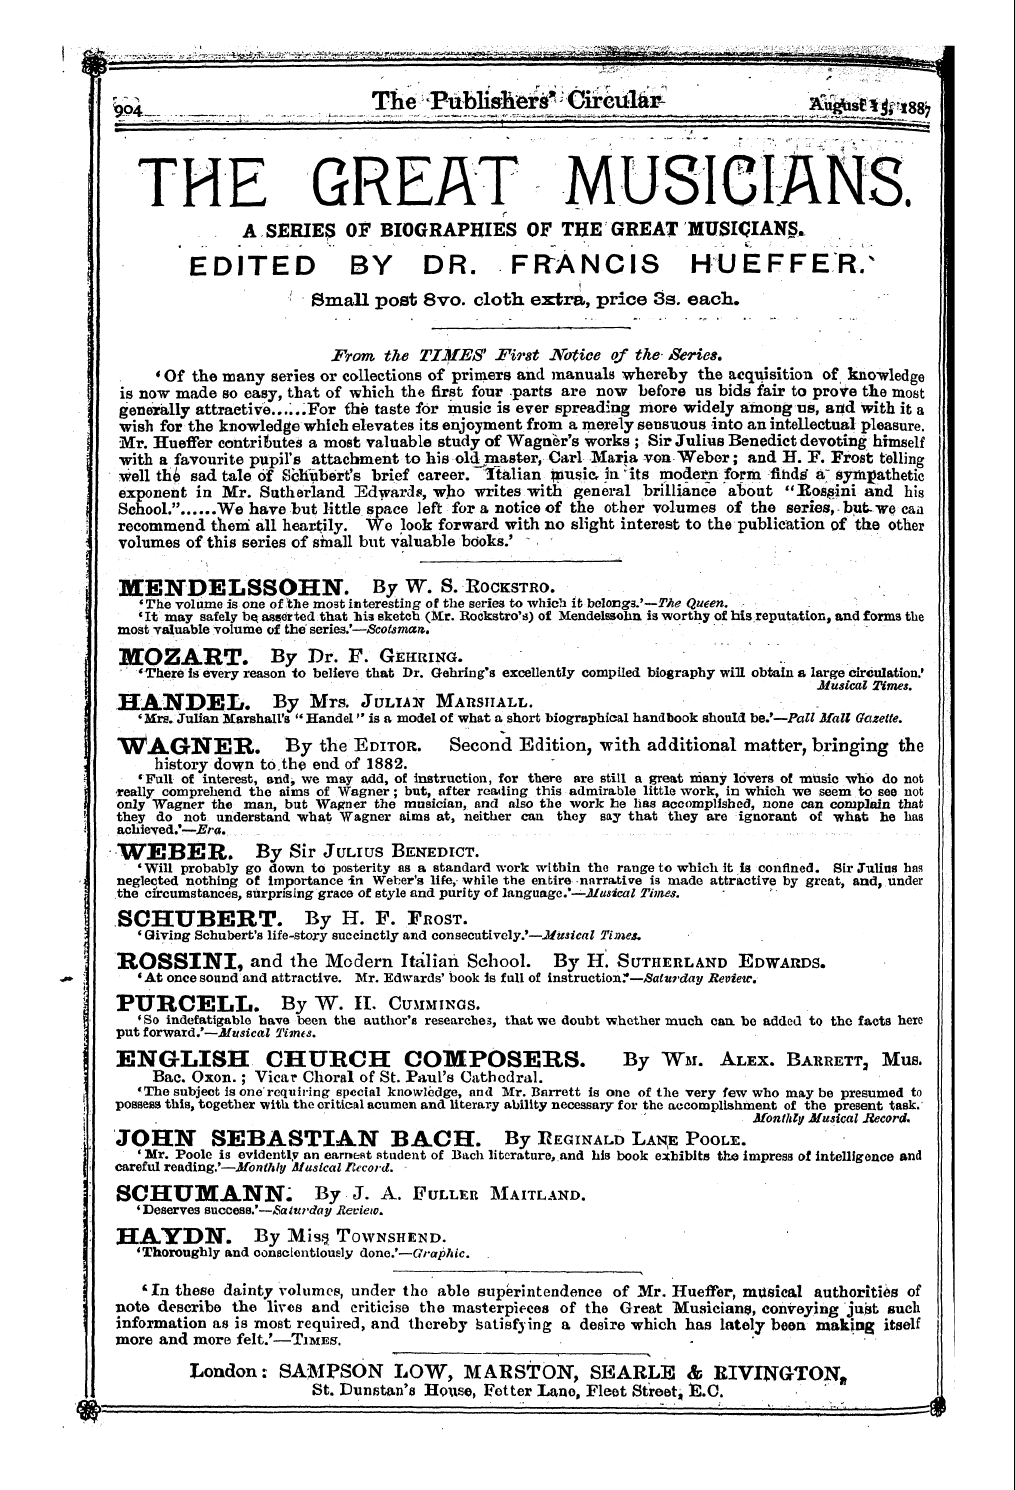 Publishers’ Circular (1880-1890): jS F Y, 1st edition: 54